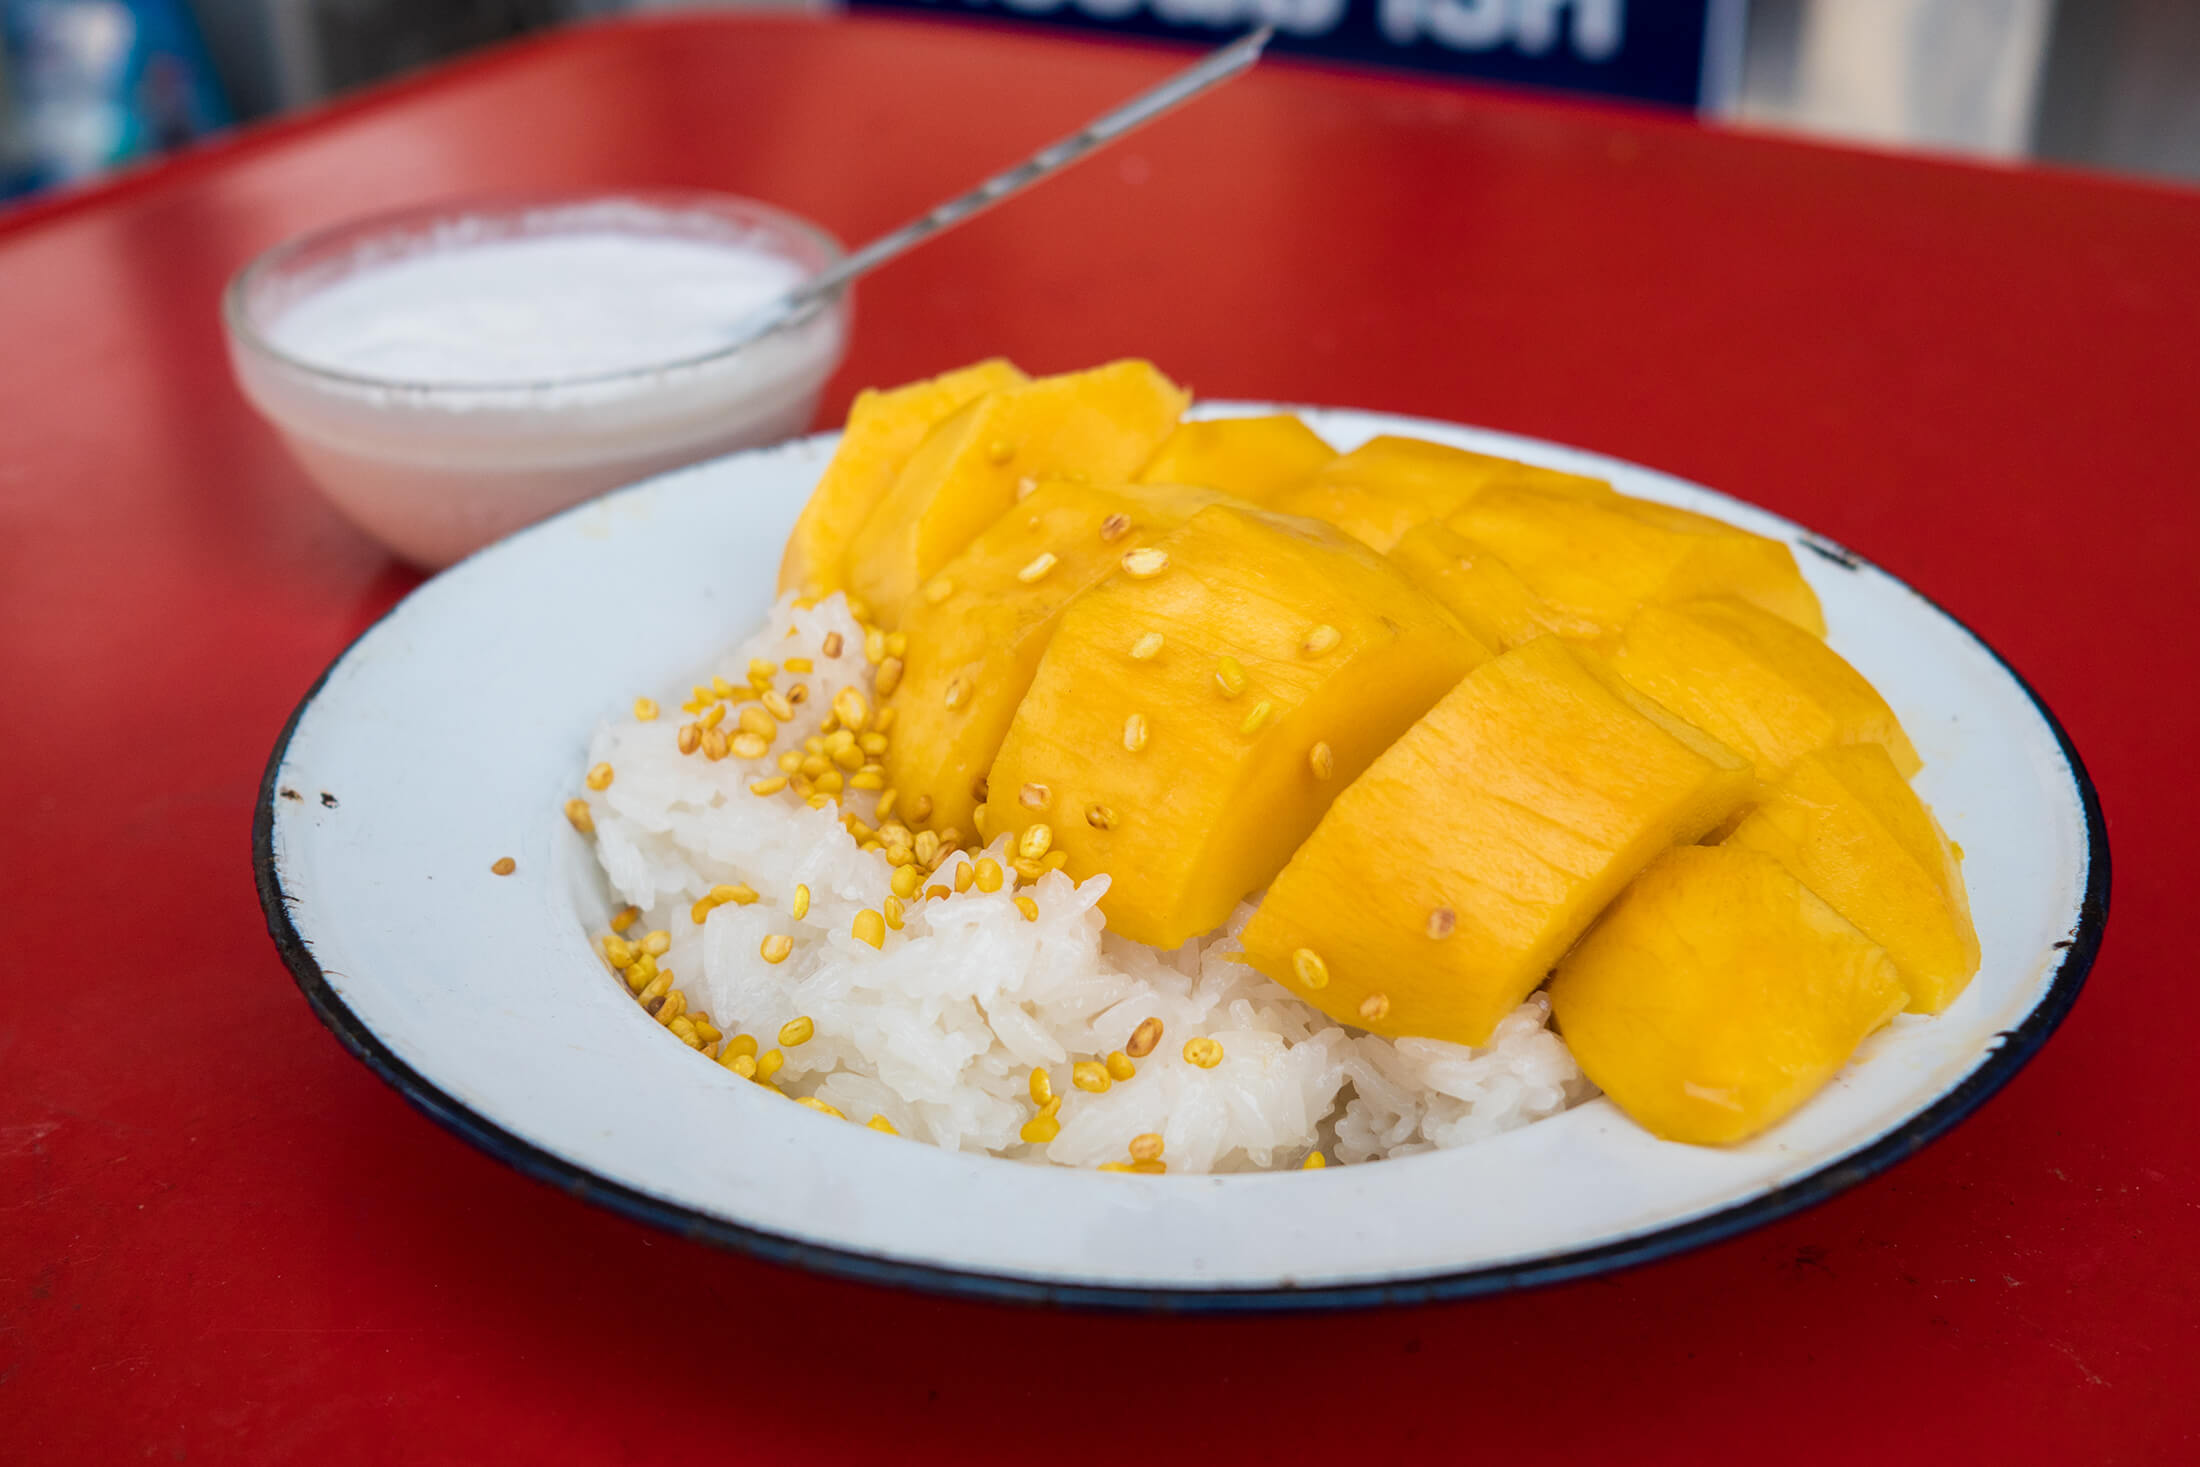 https://www.eatingthaifood.com/wp-content/uploads/2016/04/mango-sticky-rice.jpg